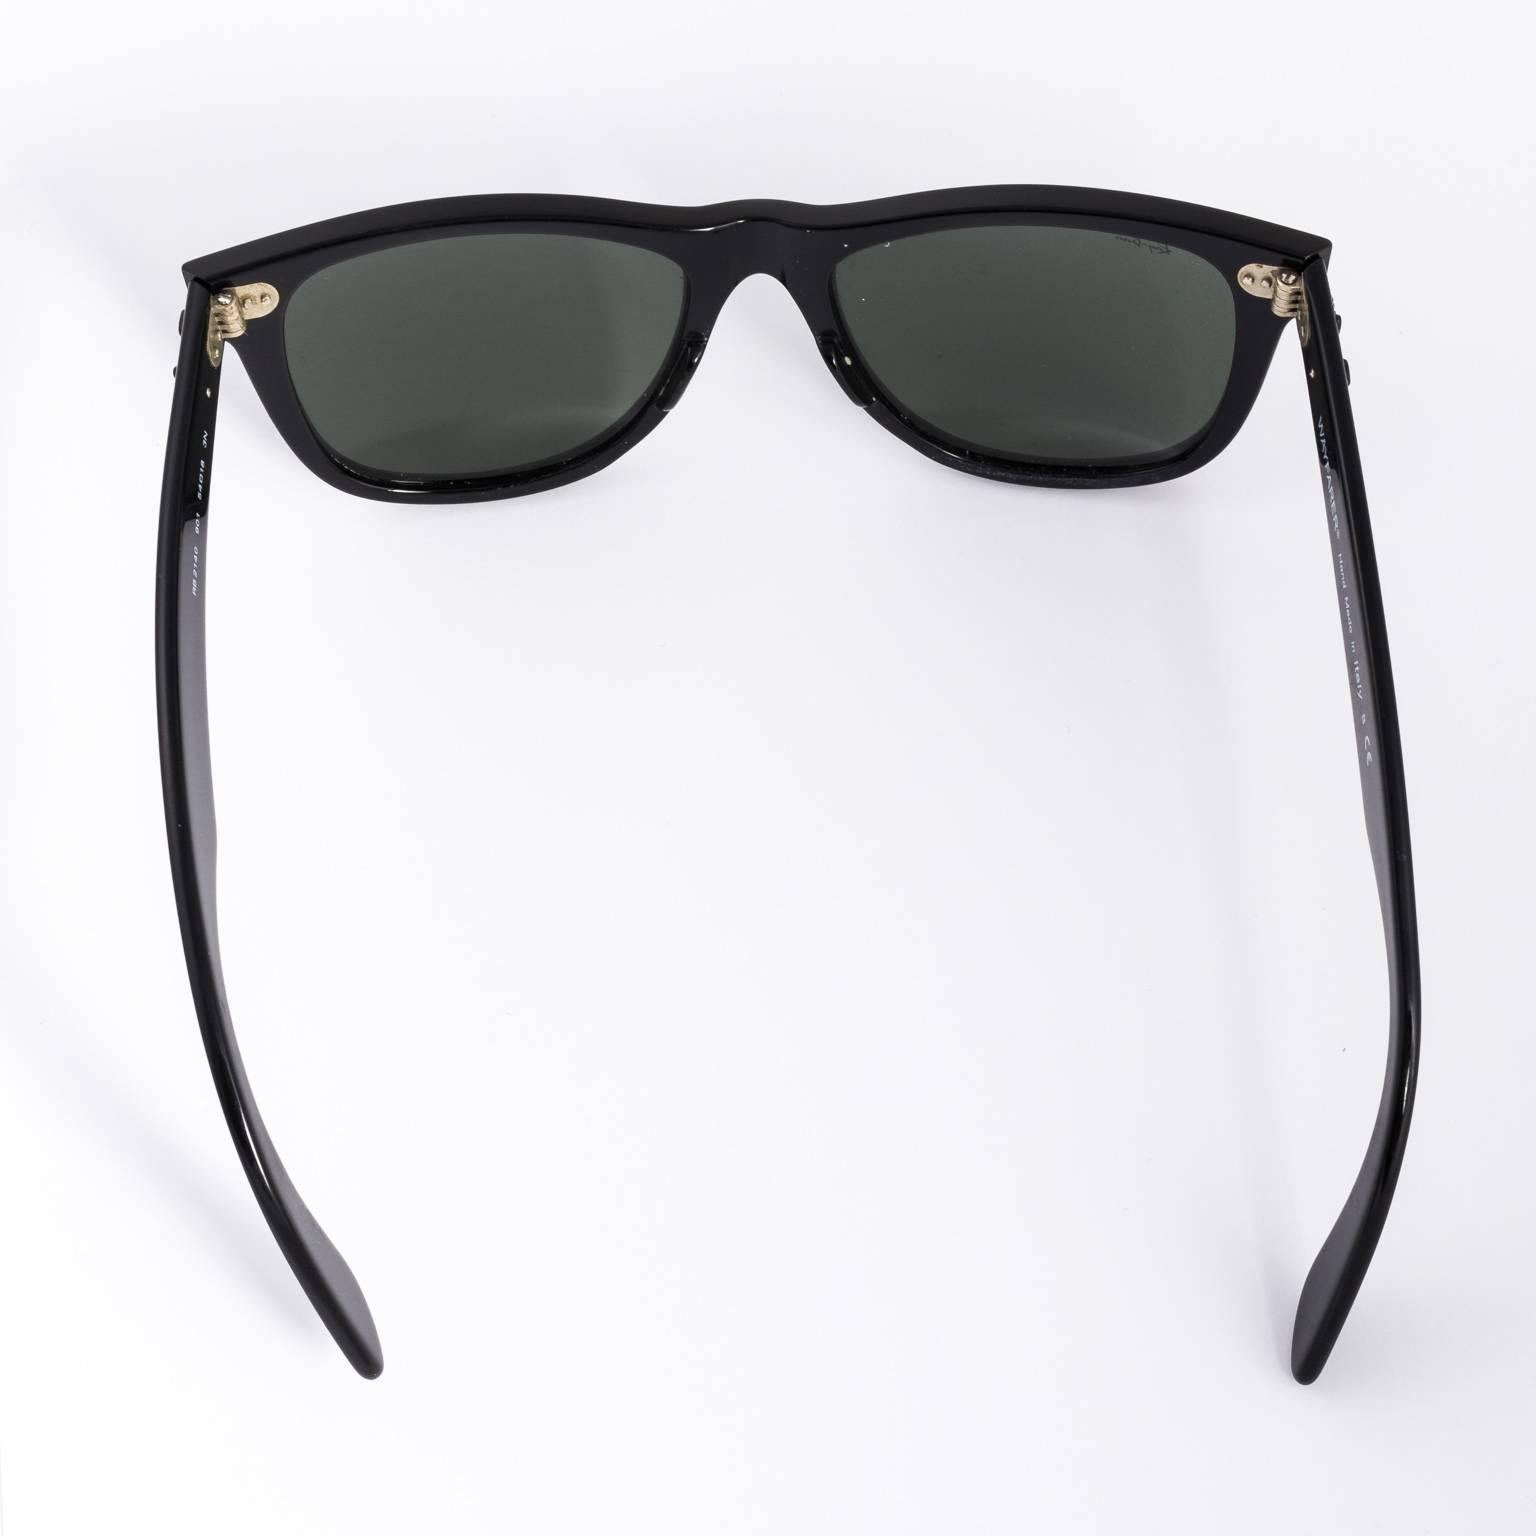  Black Ray-Ban sunglasses 7